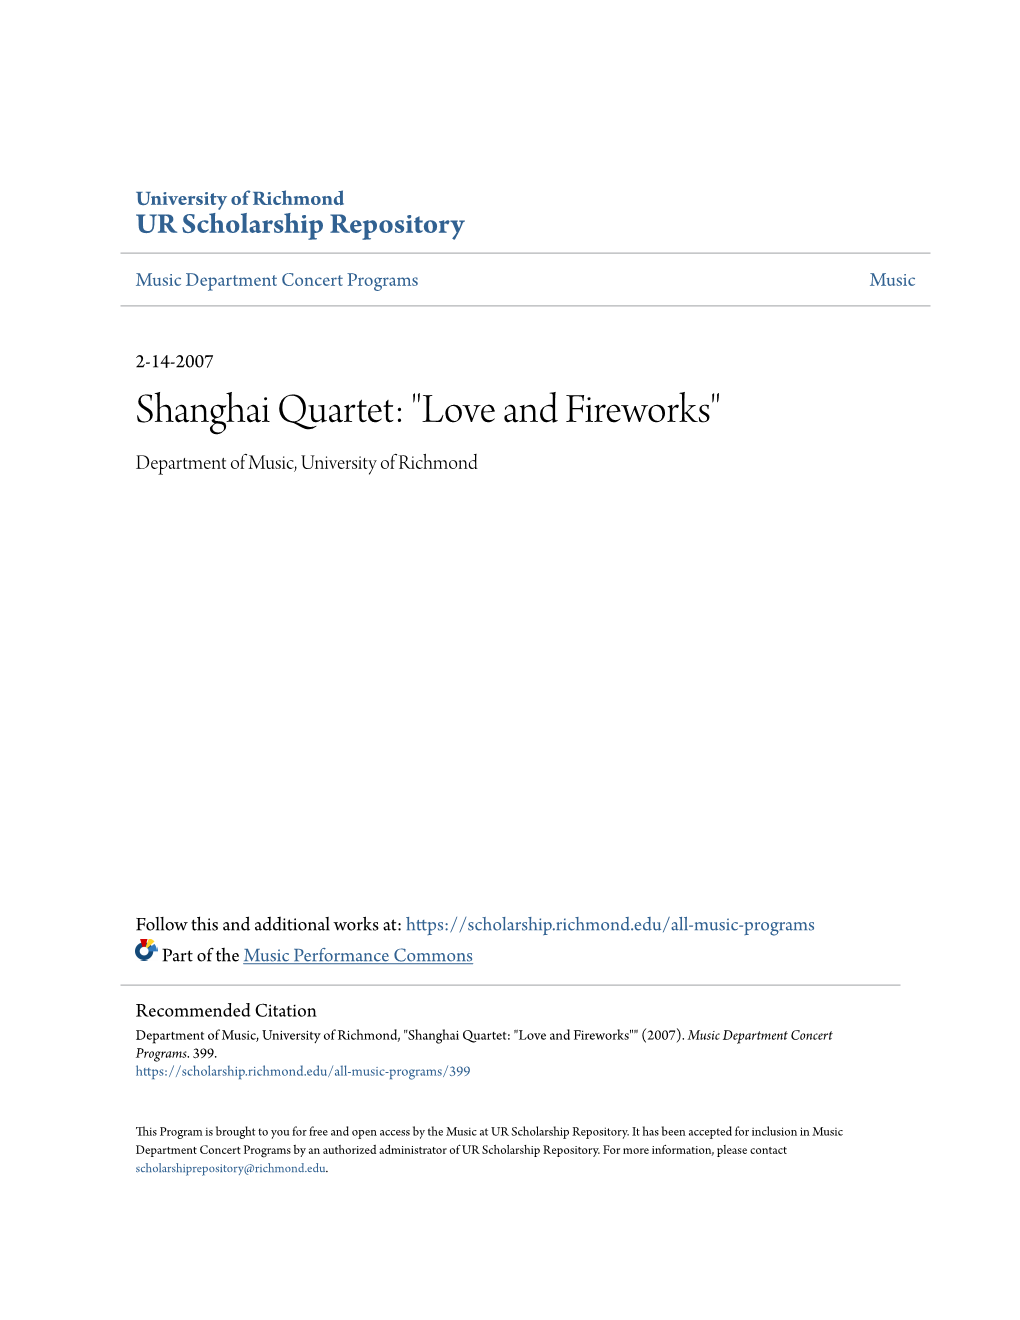 Shanghai Quartet: "Love and Fireworks" Department of Music, University of Richmond